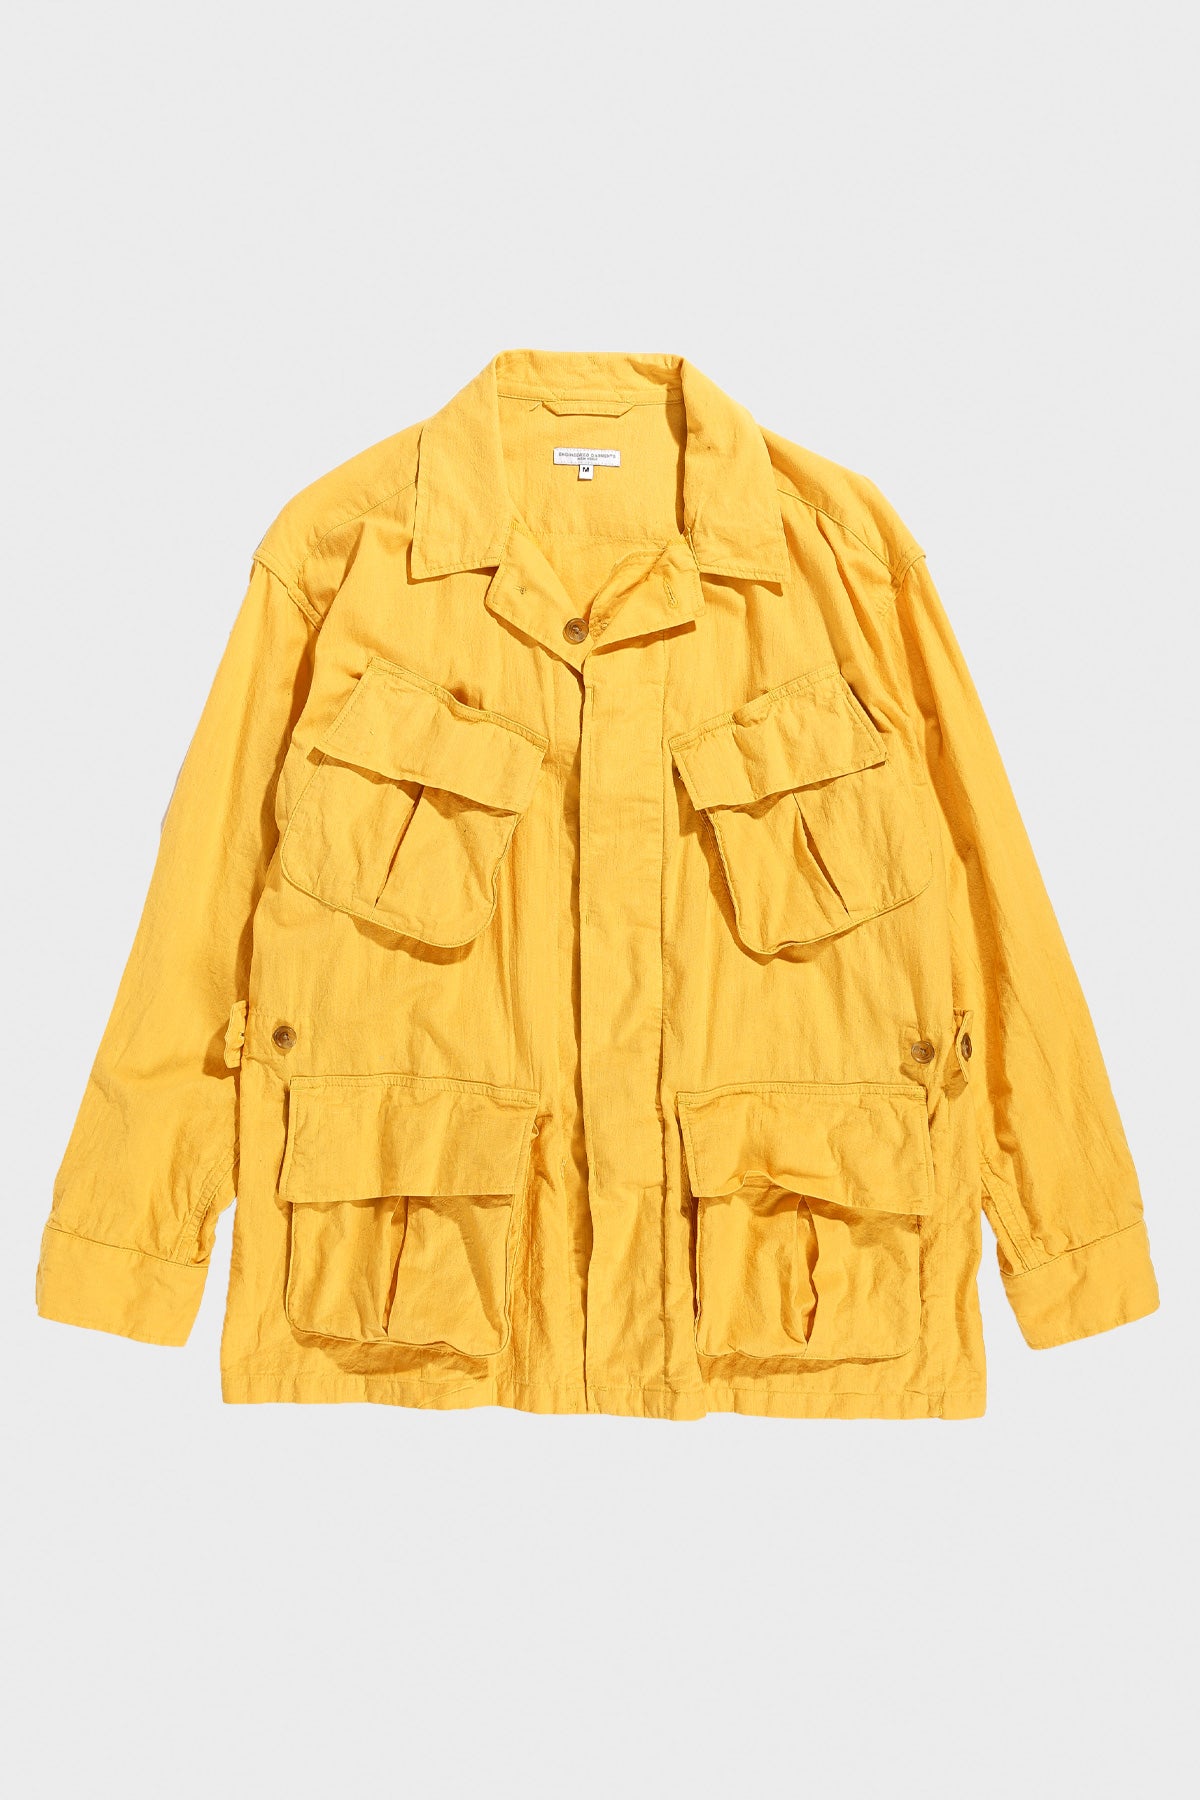 Engineered Garments Jungle Fatigue Jacket Yellow Cotton Sheeting Canoe  Club